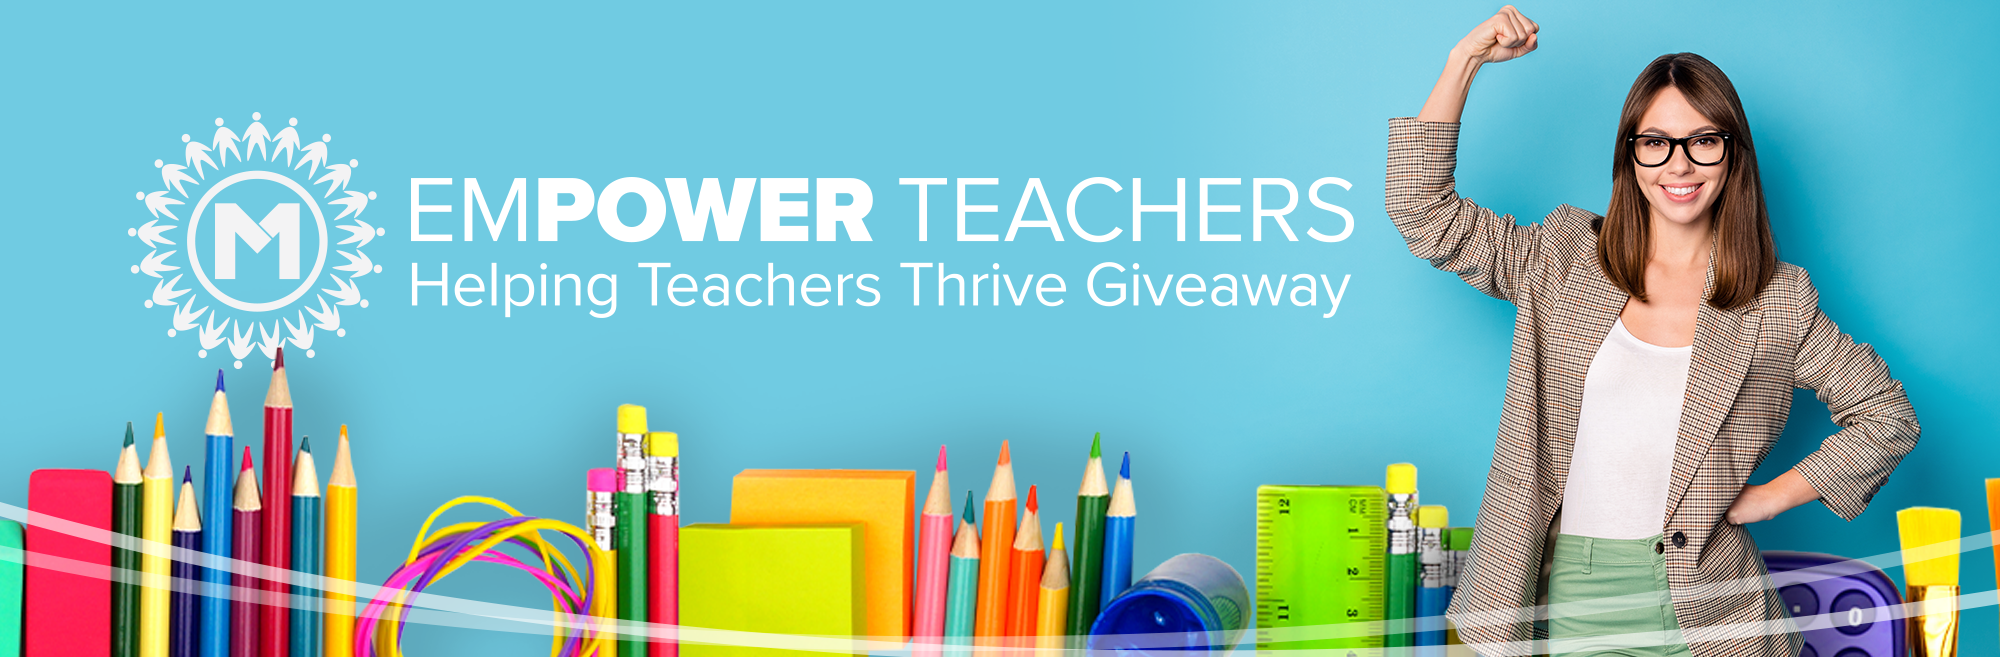 Empower Teachers Giveaway Banner